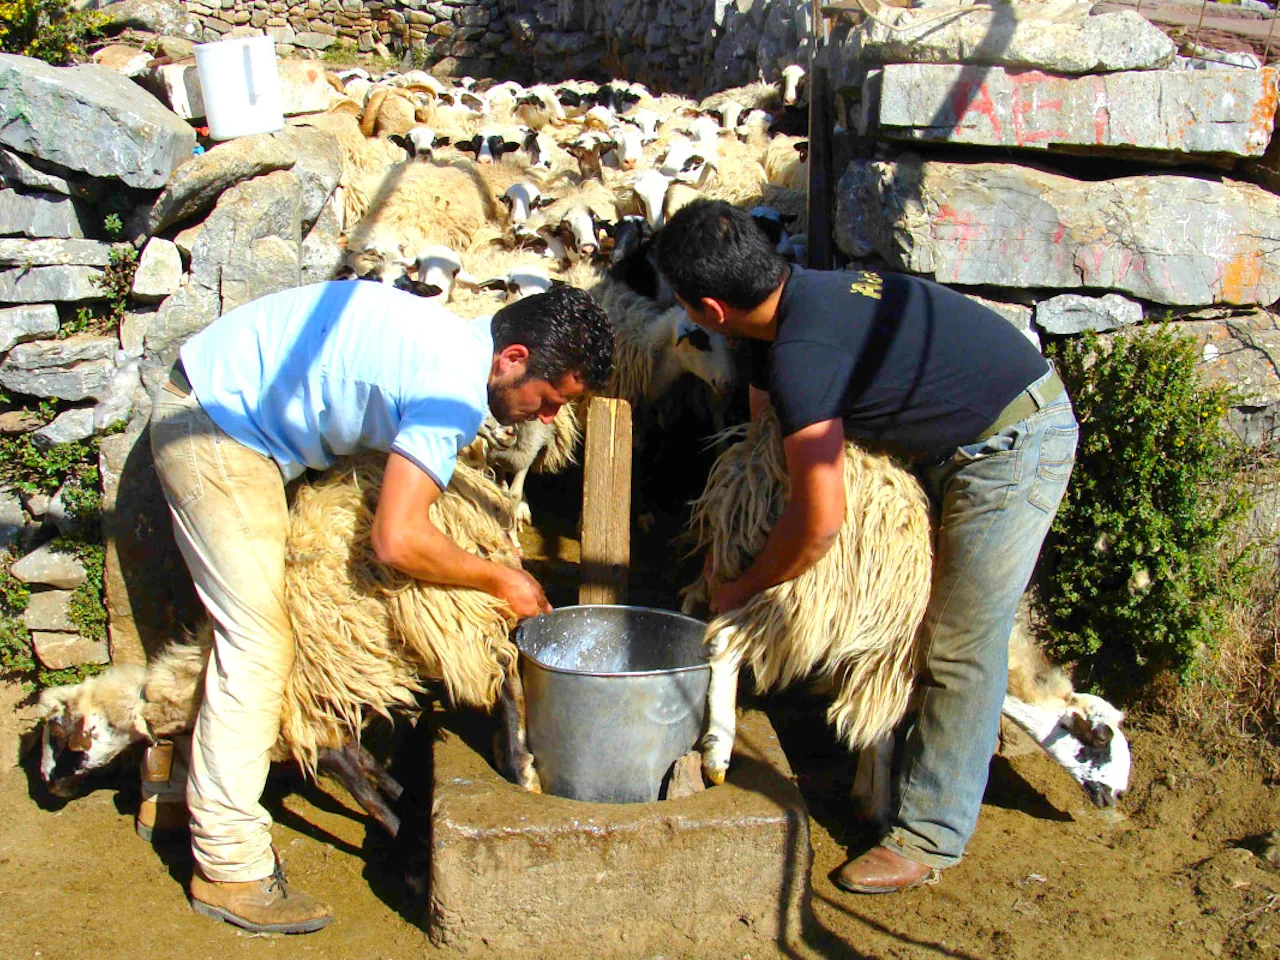 Джип-сафари, разведение коз и изготовление сыра